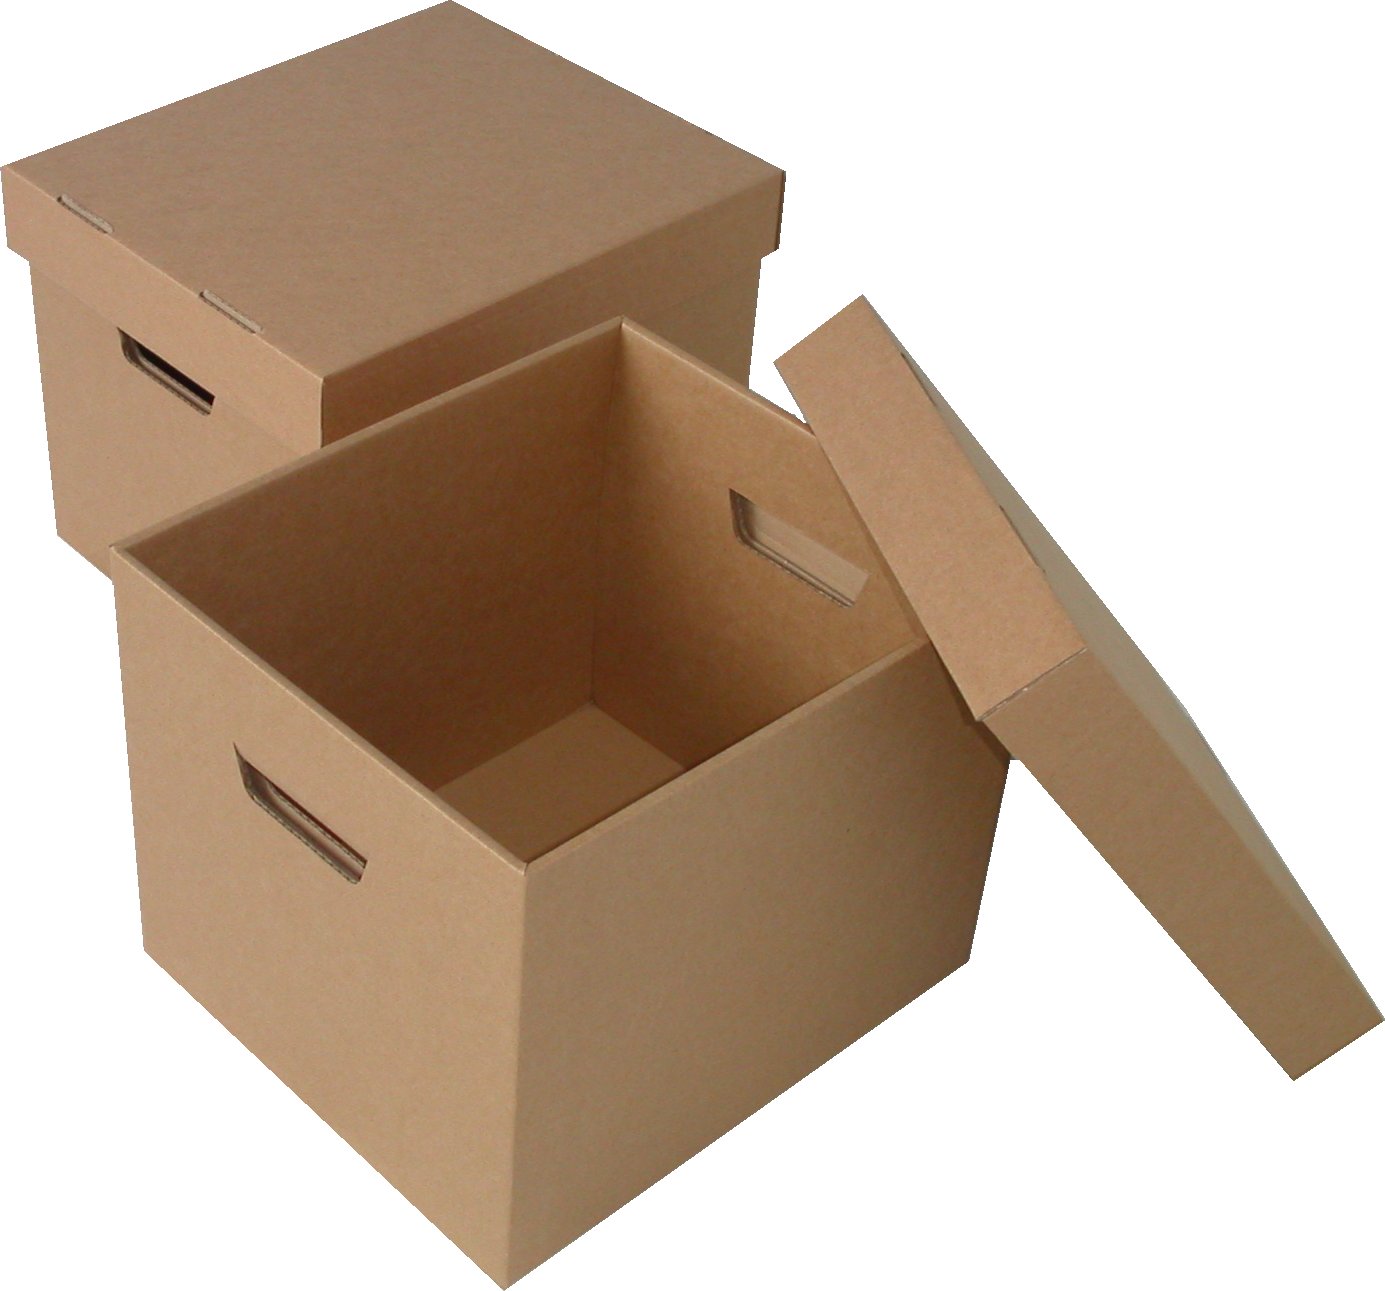 cardboard boxes melbourne